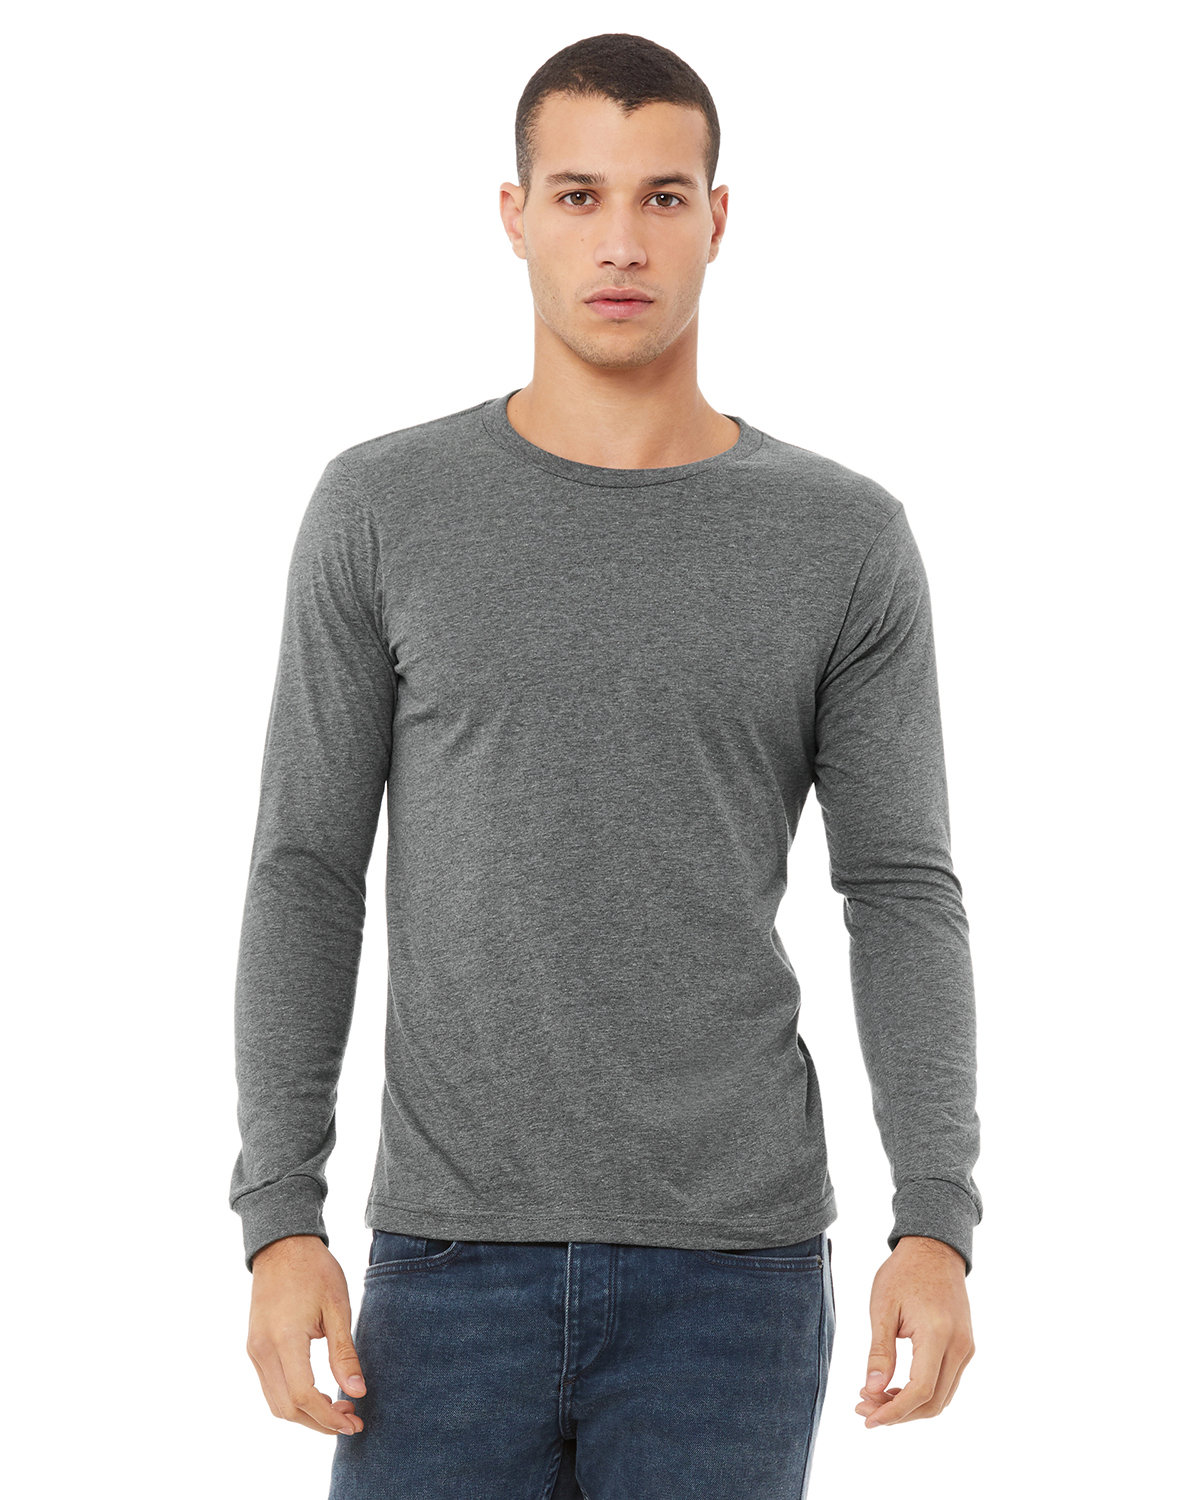 grey long sleeve shirt